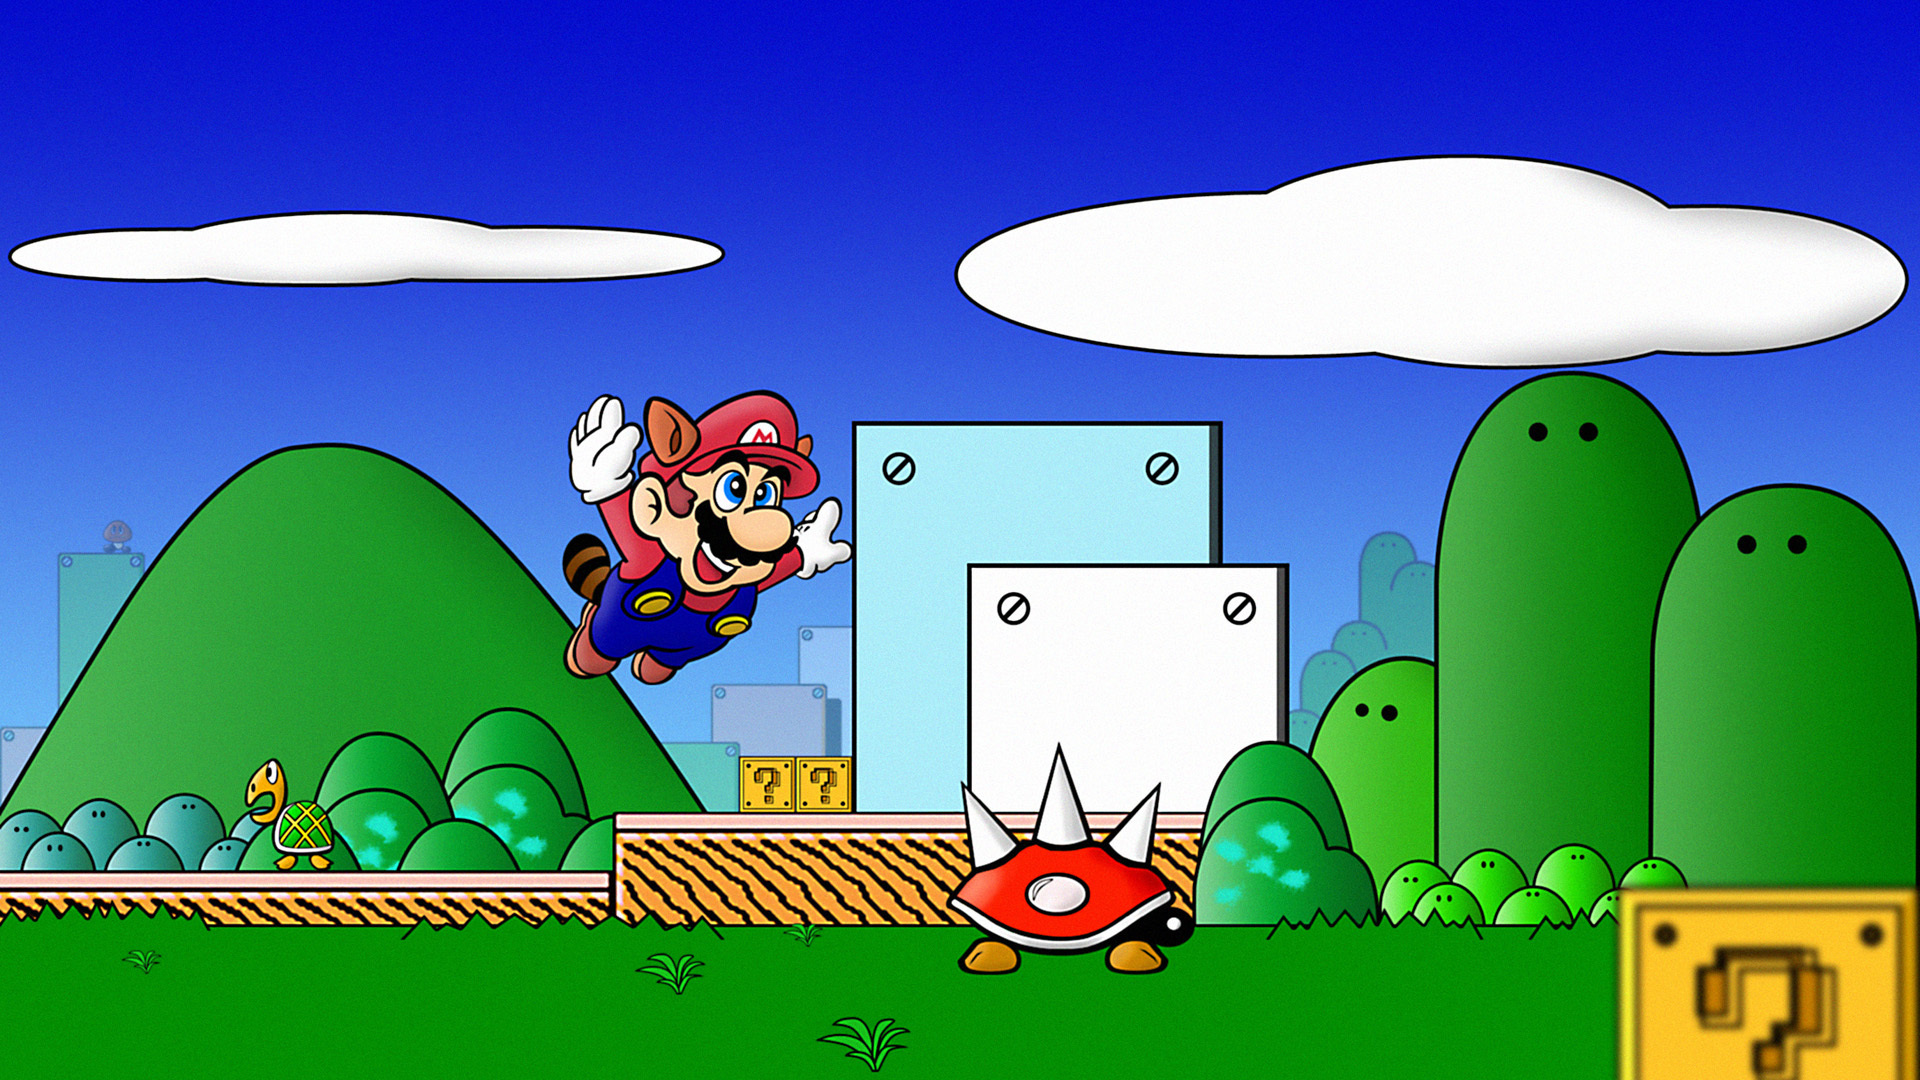 Mario Bros wallpaper - 1338325